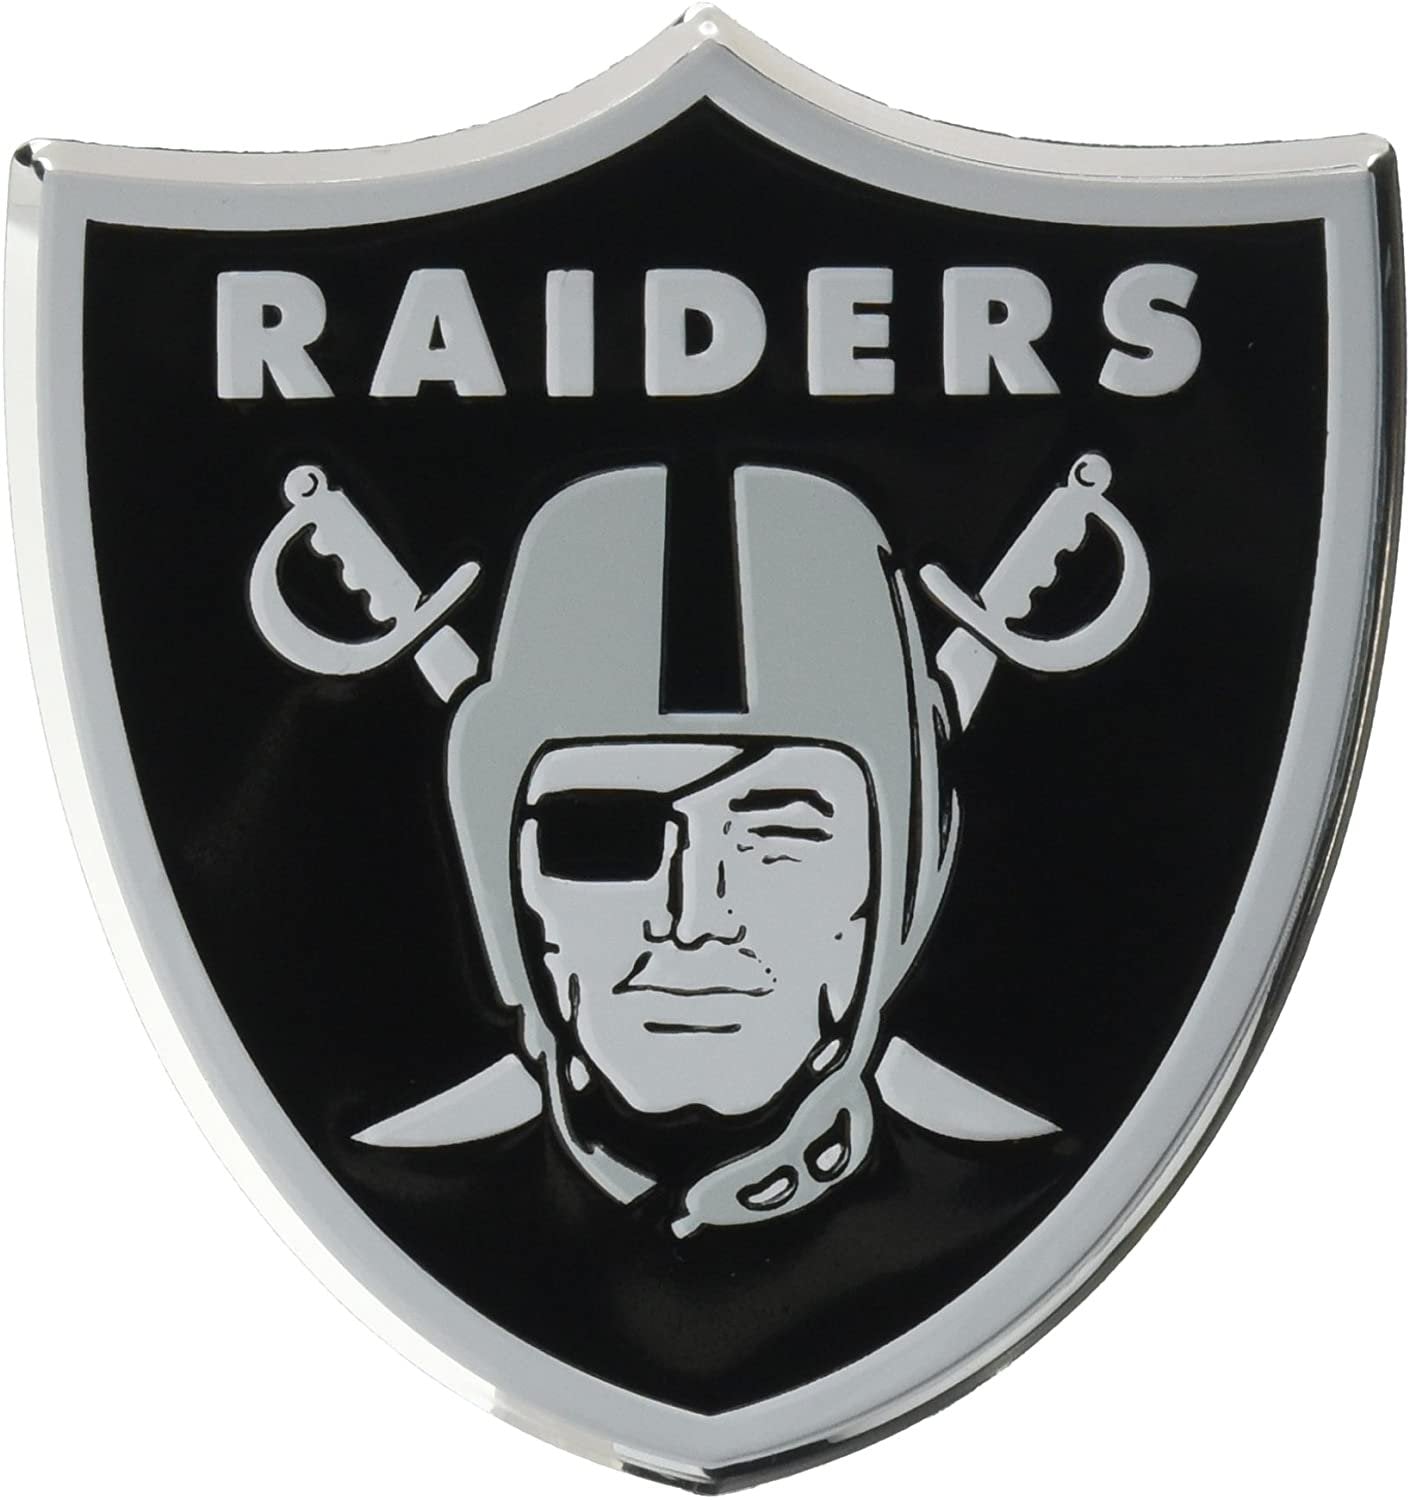 Las Vegas Raiders Auto Emblem, Aluminum Metal, Embossed Team Color, Raised Decal Sticker, Full Adhesive Backing